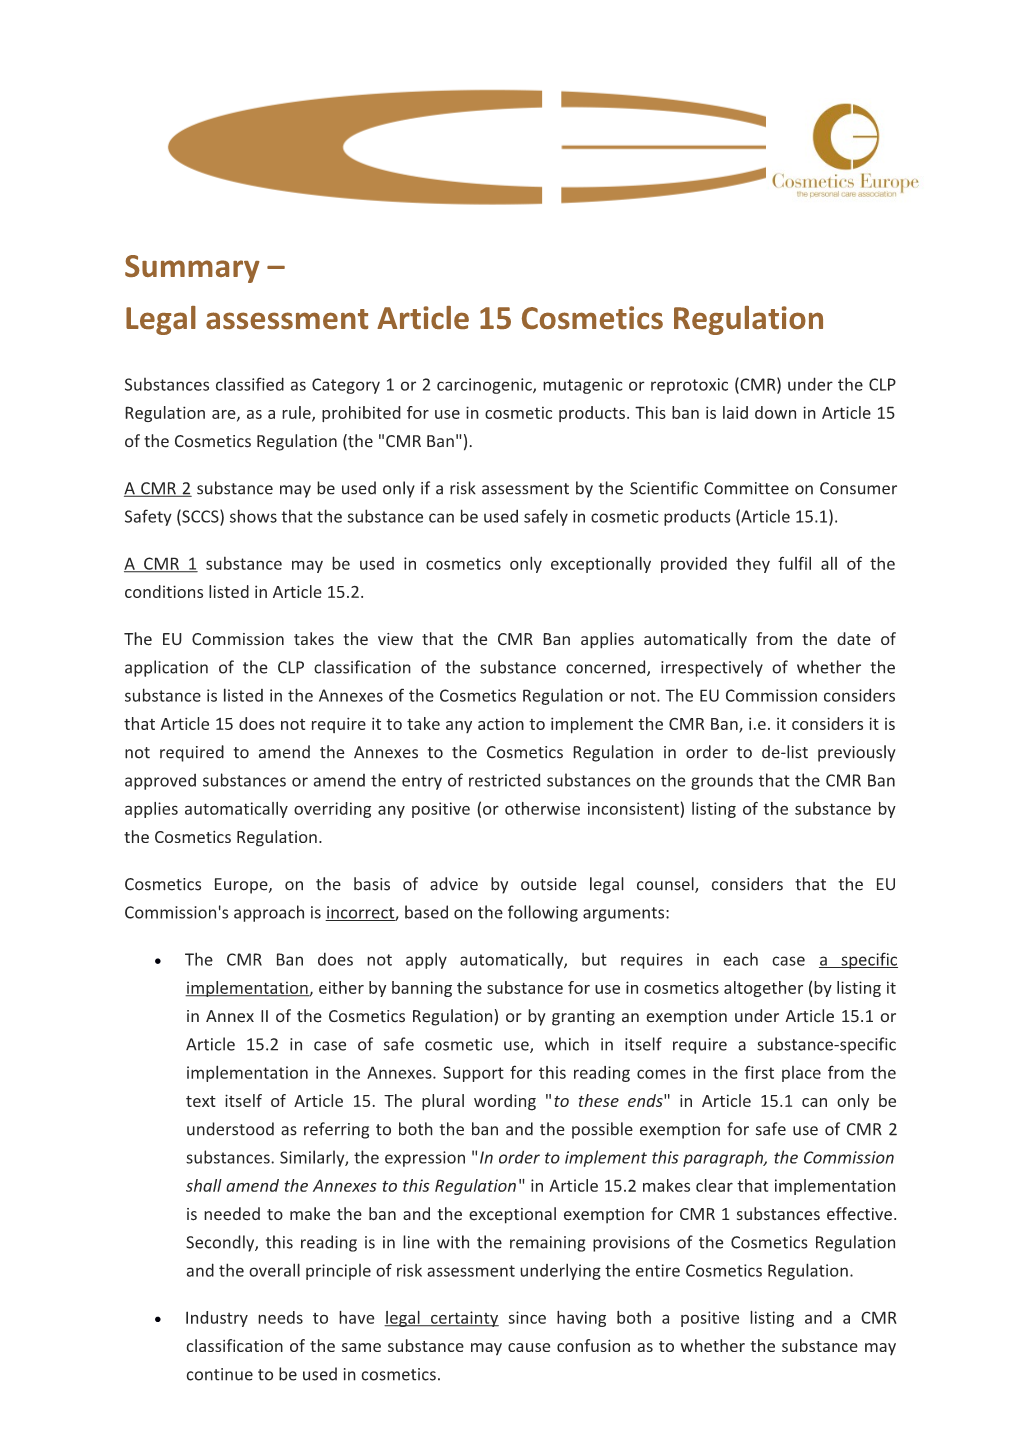 Legal Assessment Article 15 Cosmetics Regulation